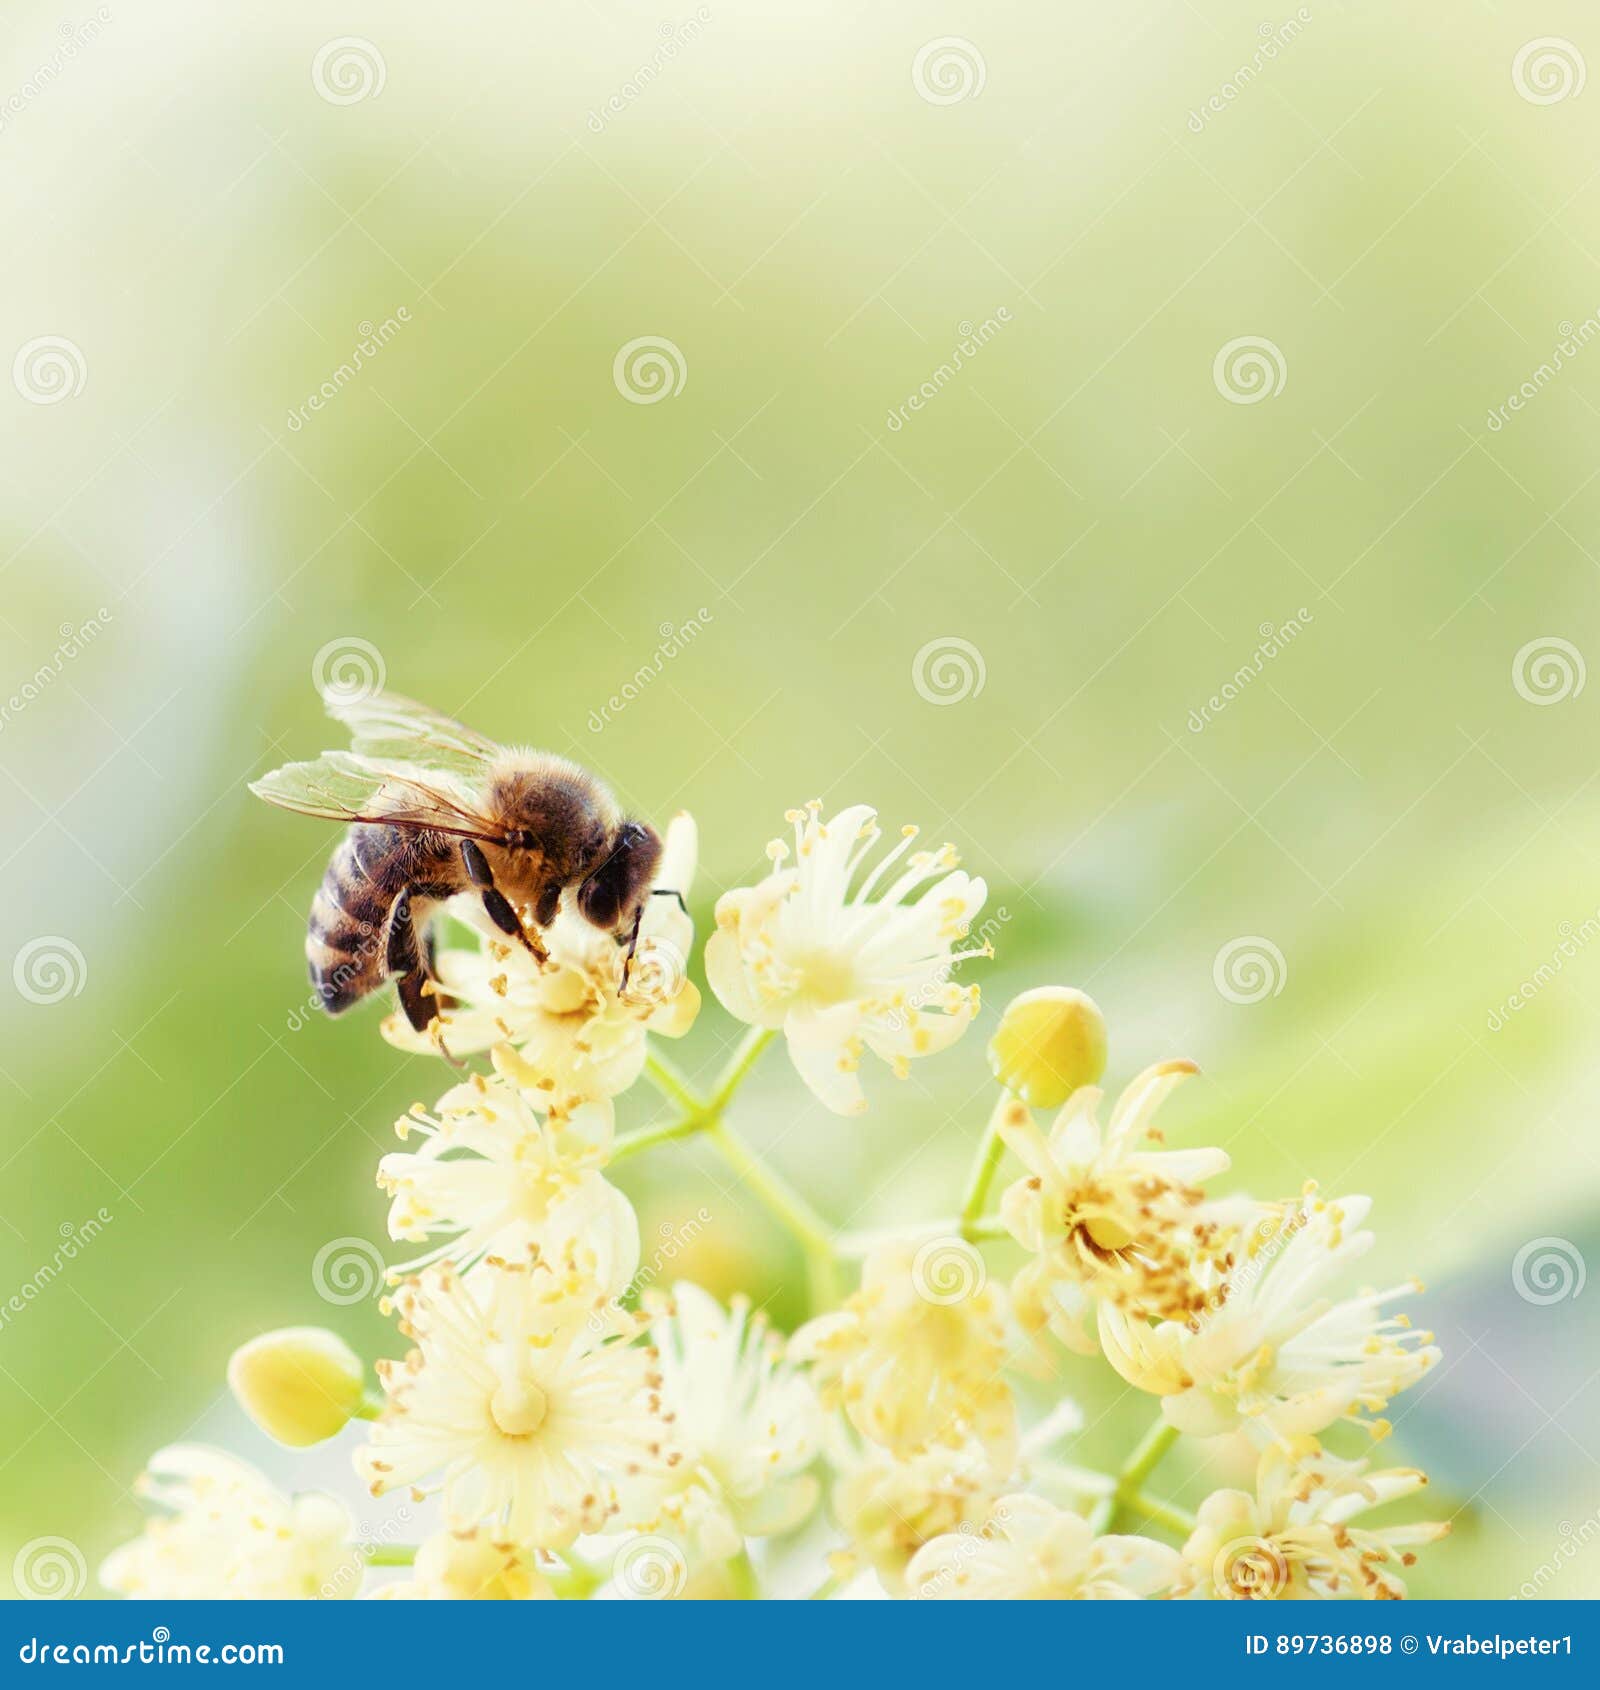 honey bee pollinate yellow flower, beauty filter